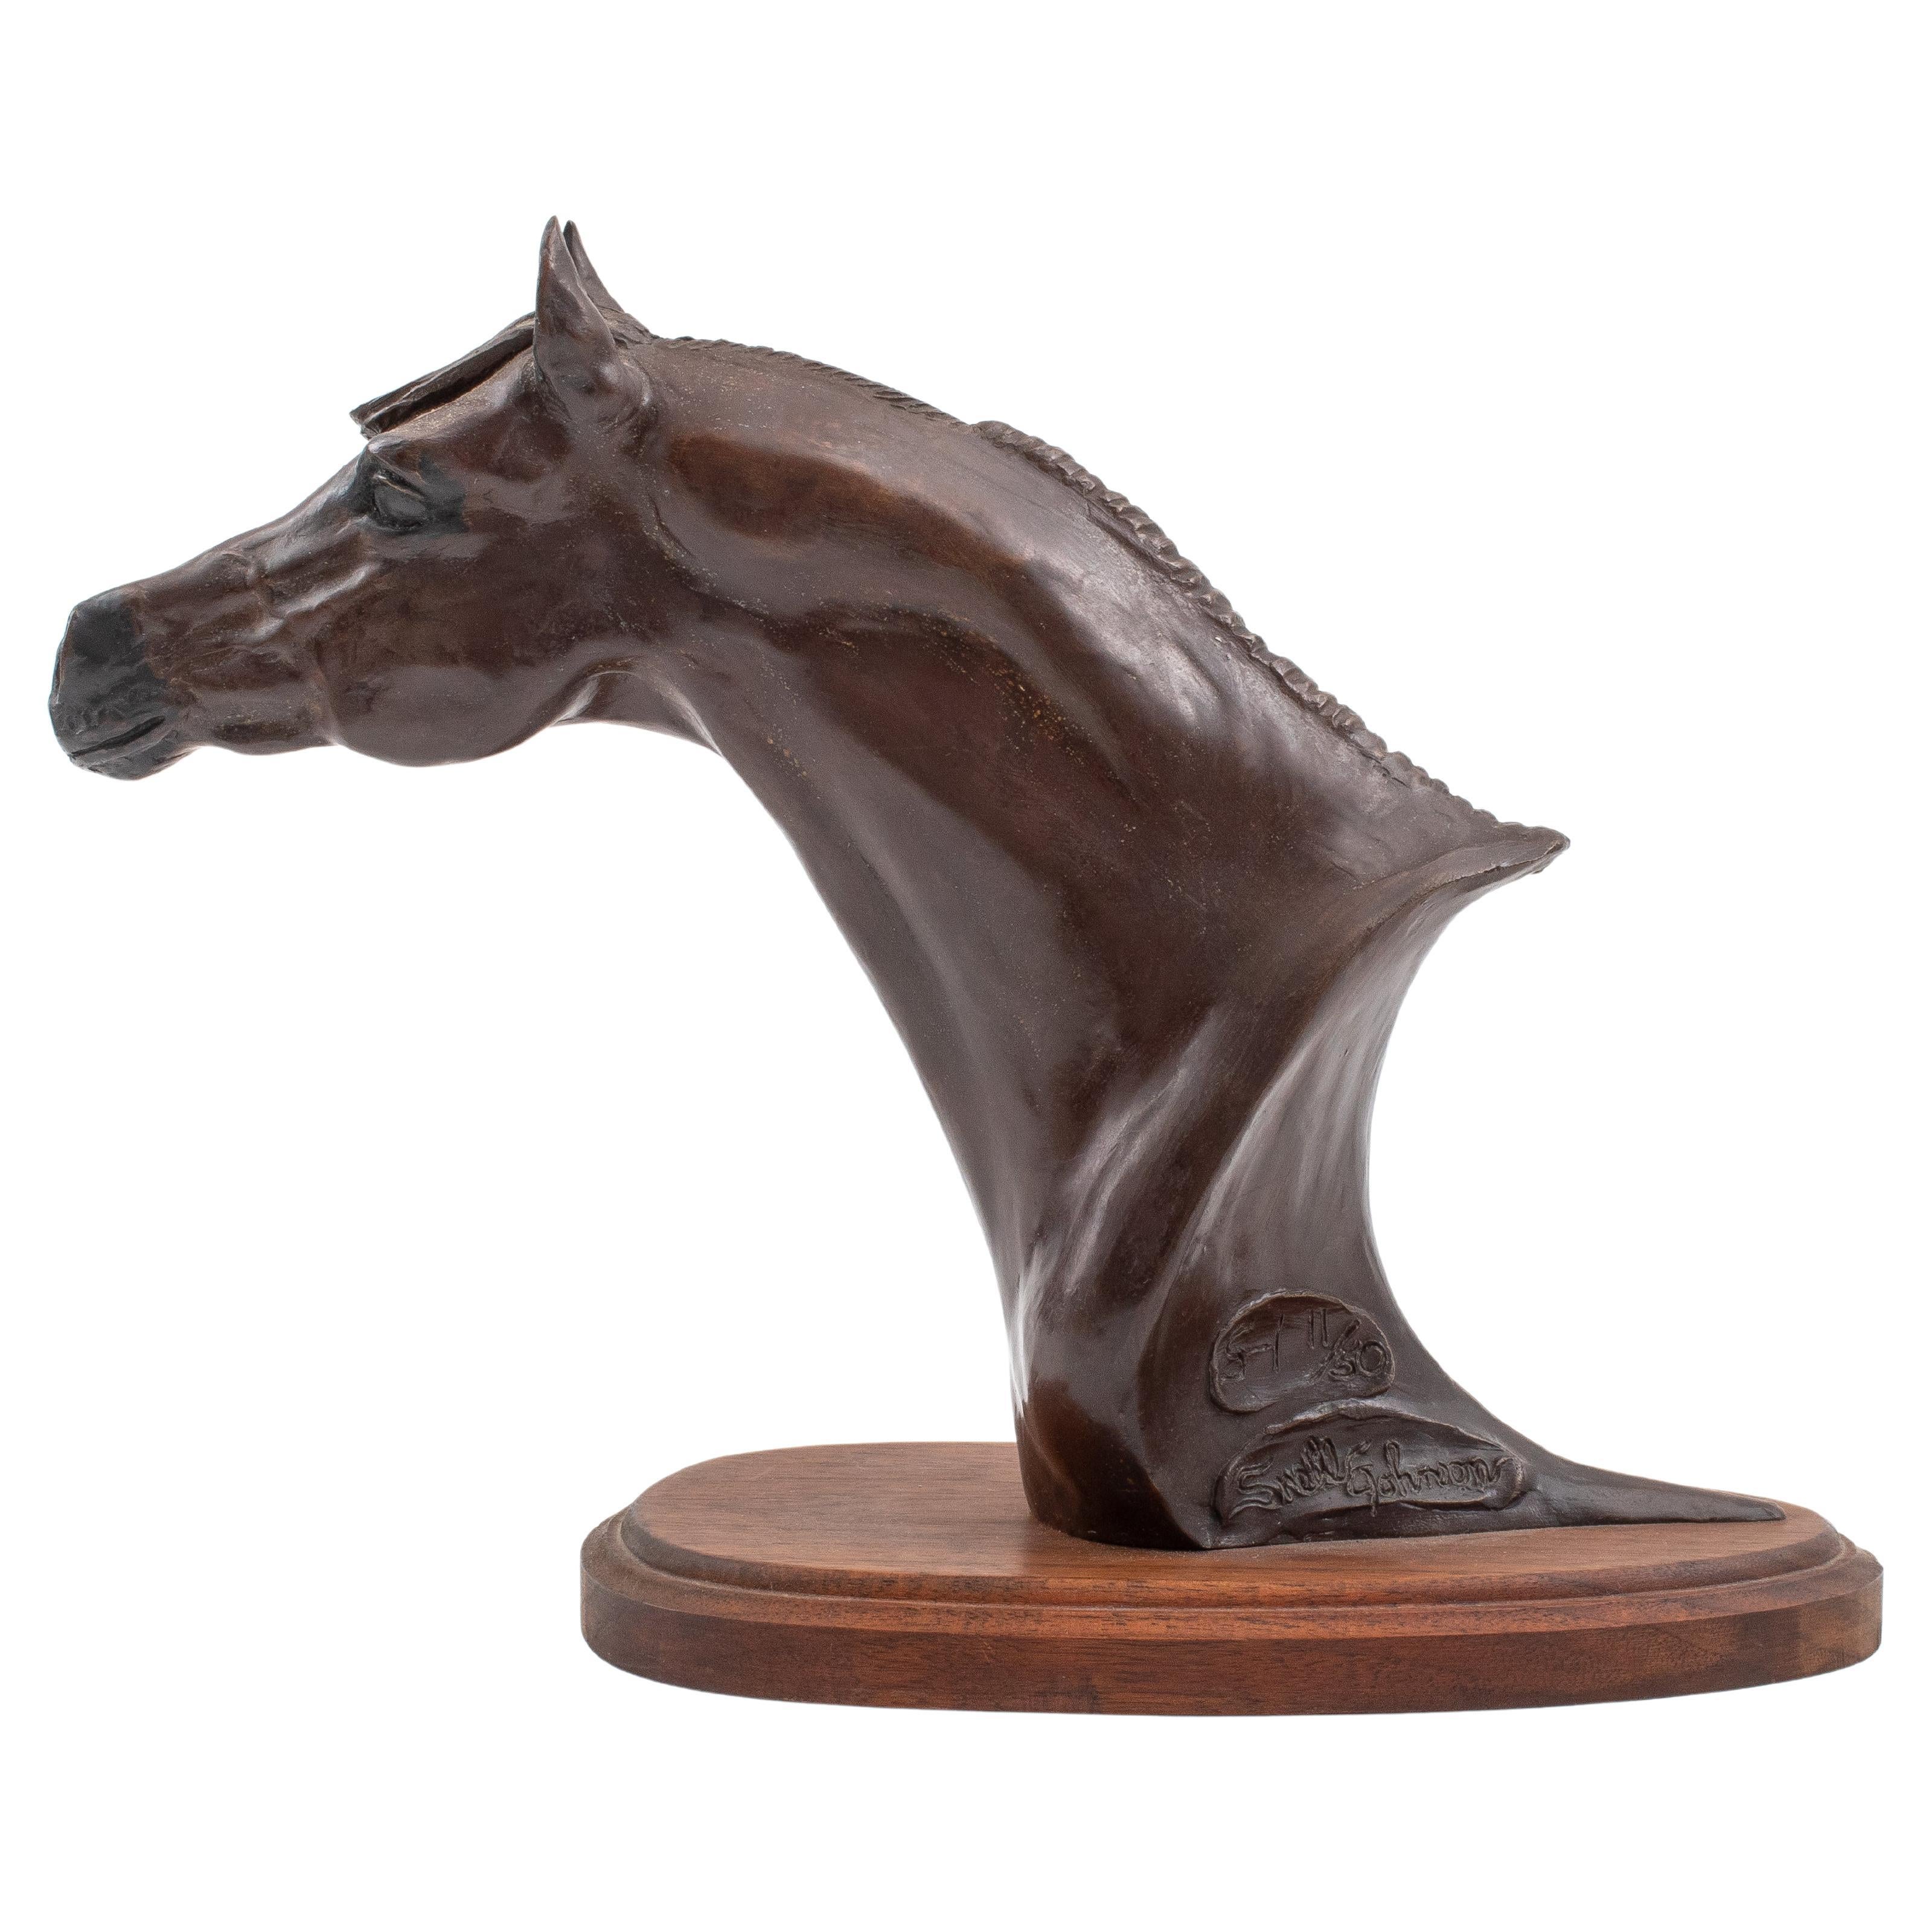 Snell Johnson "NV Pingo" Bronze Horse Bust For Sale